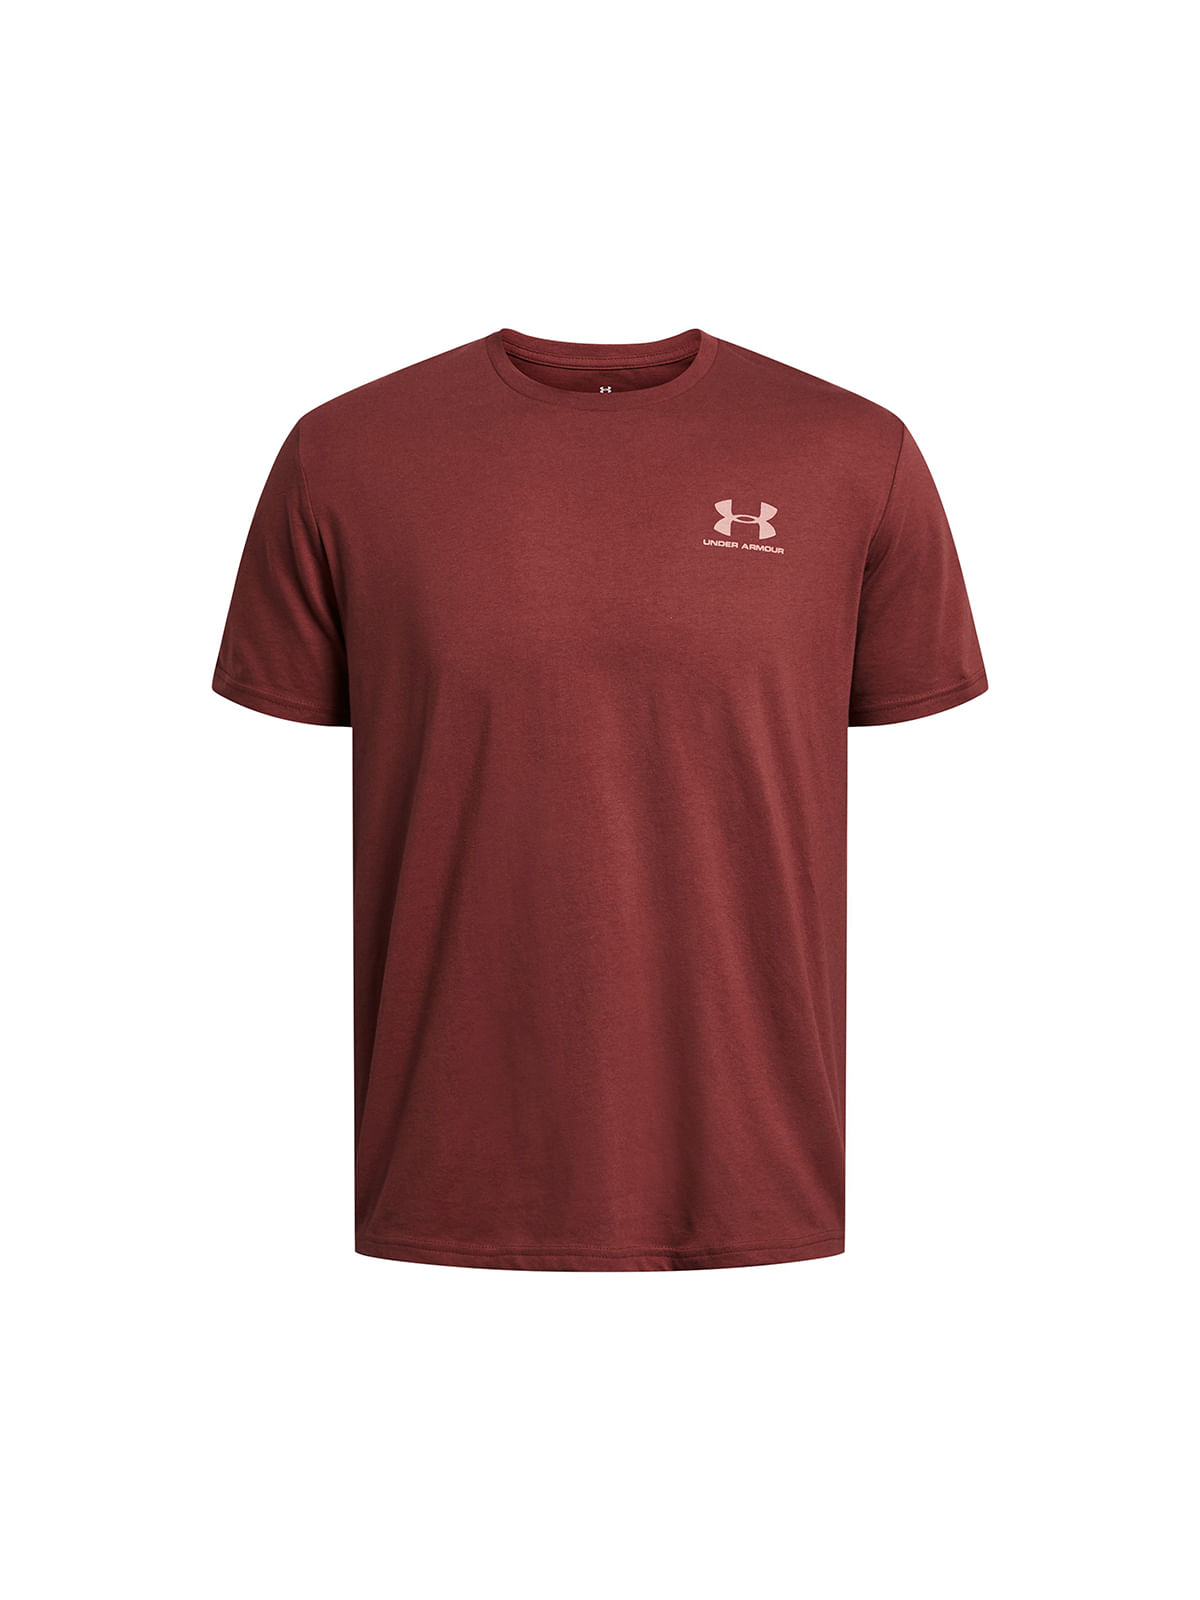 UNDER ARMOUR - Camiseta morada Sportstyle 1326799 Hombre